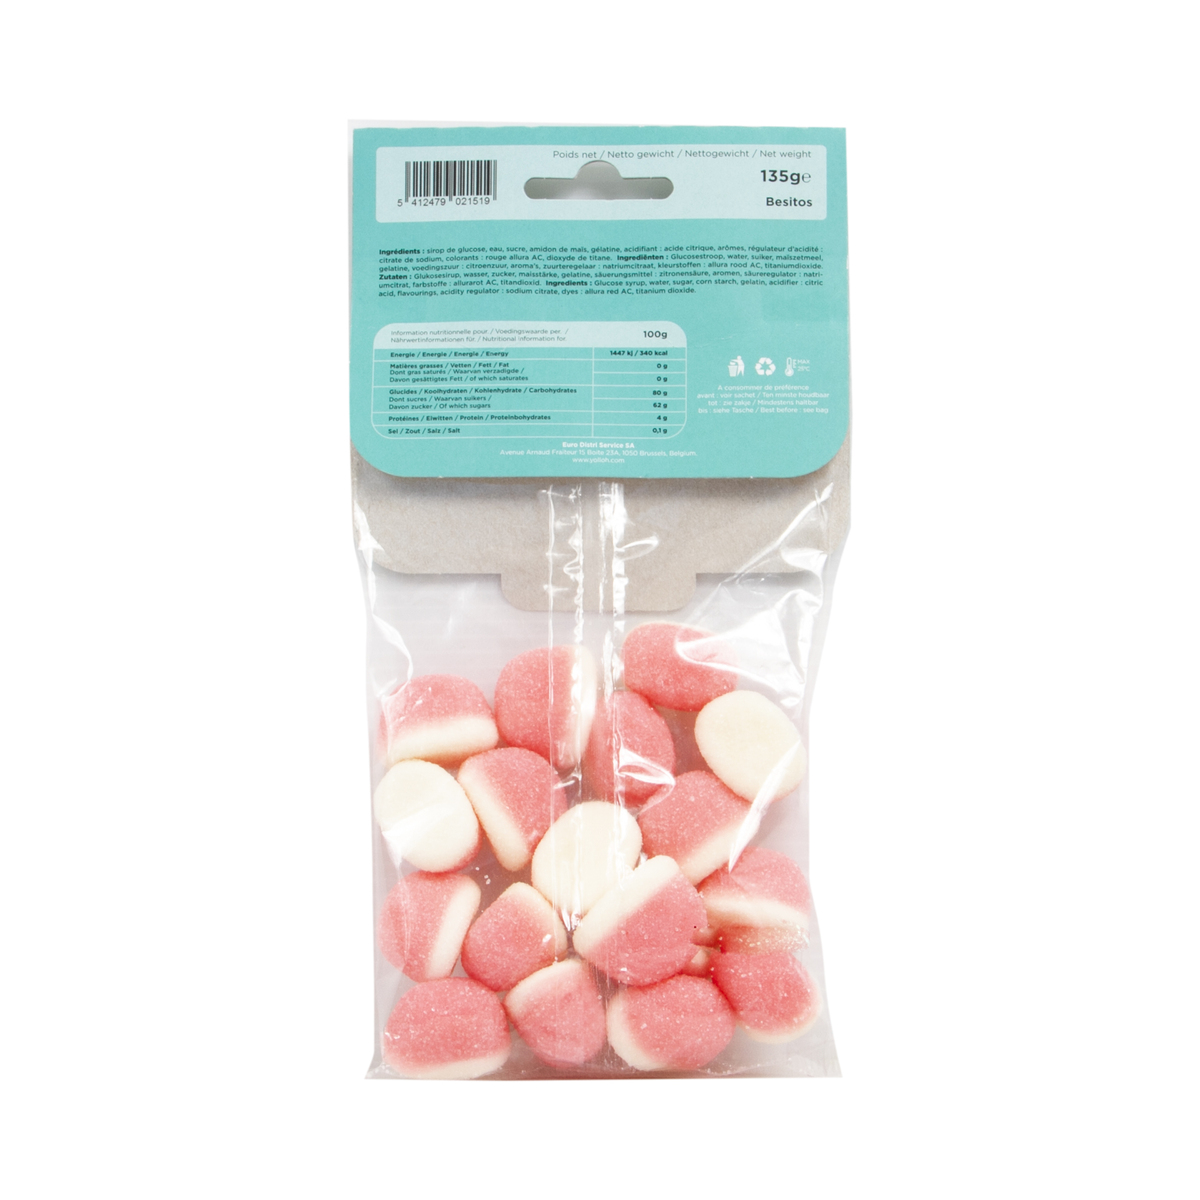 Yolloh Taste Of Pleasure Besitos 135g Candy Bags Lulu Kuwait 7084